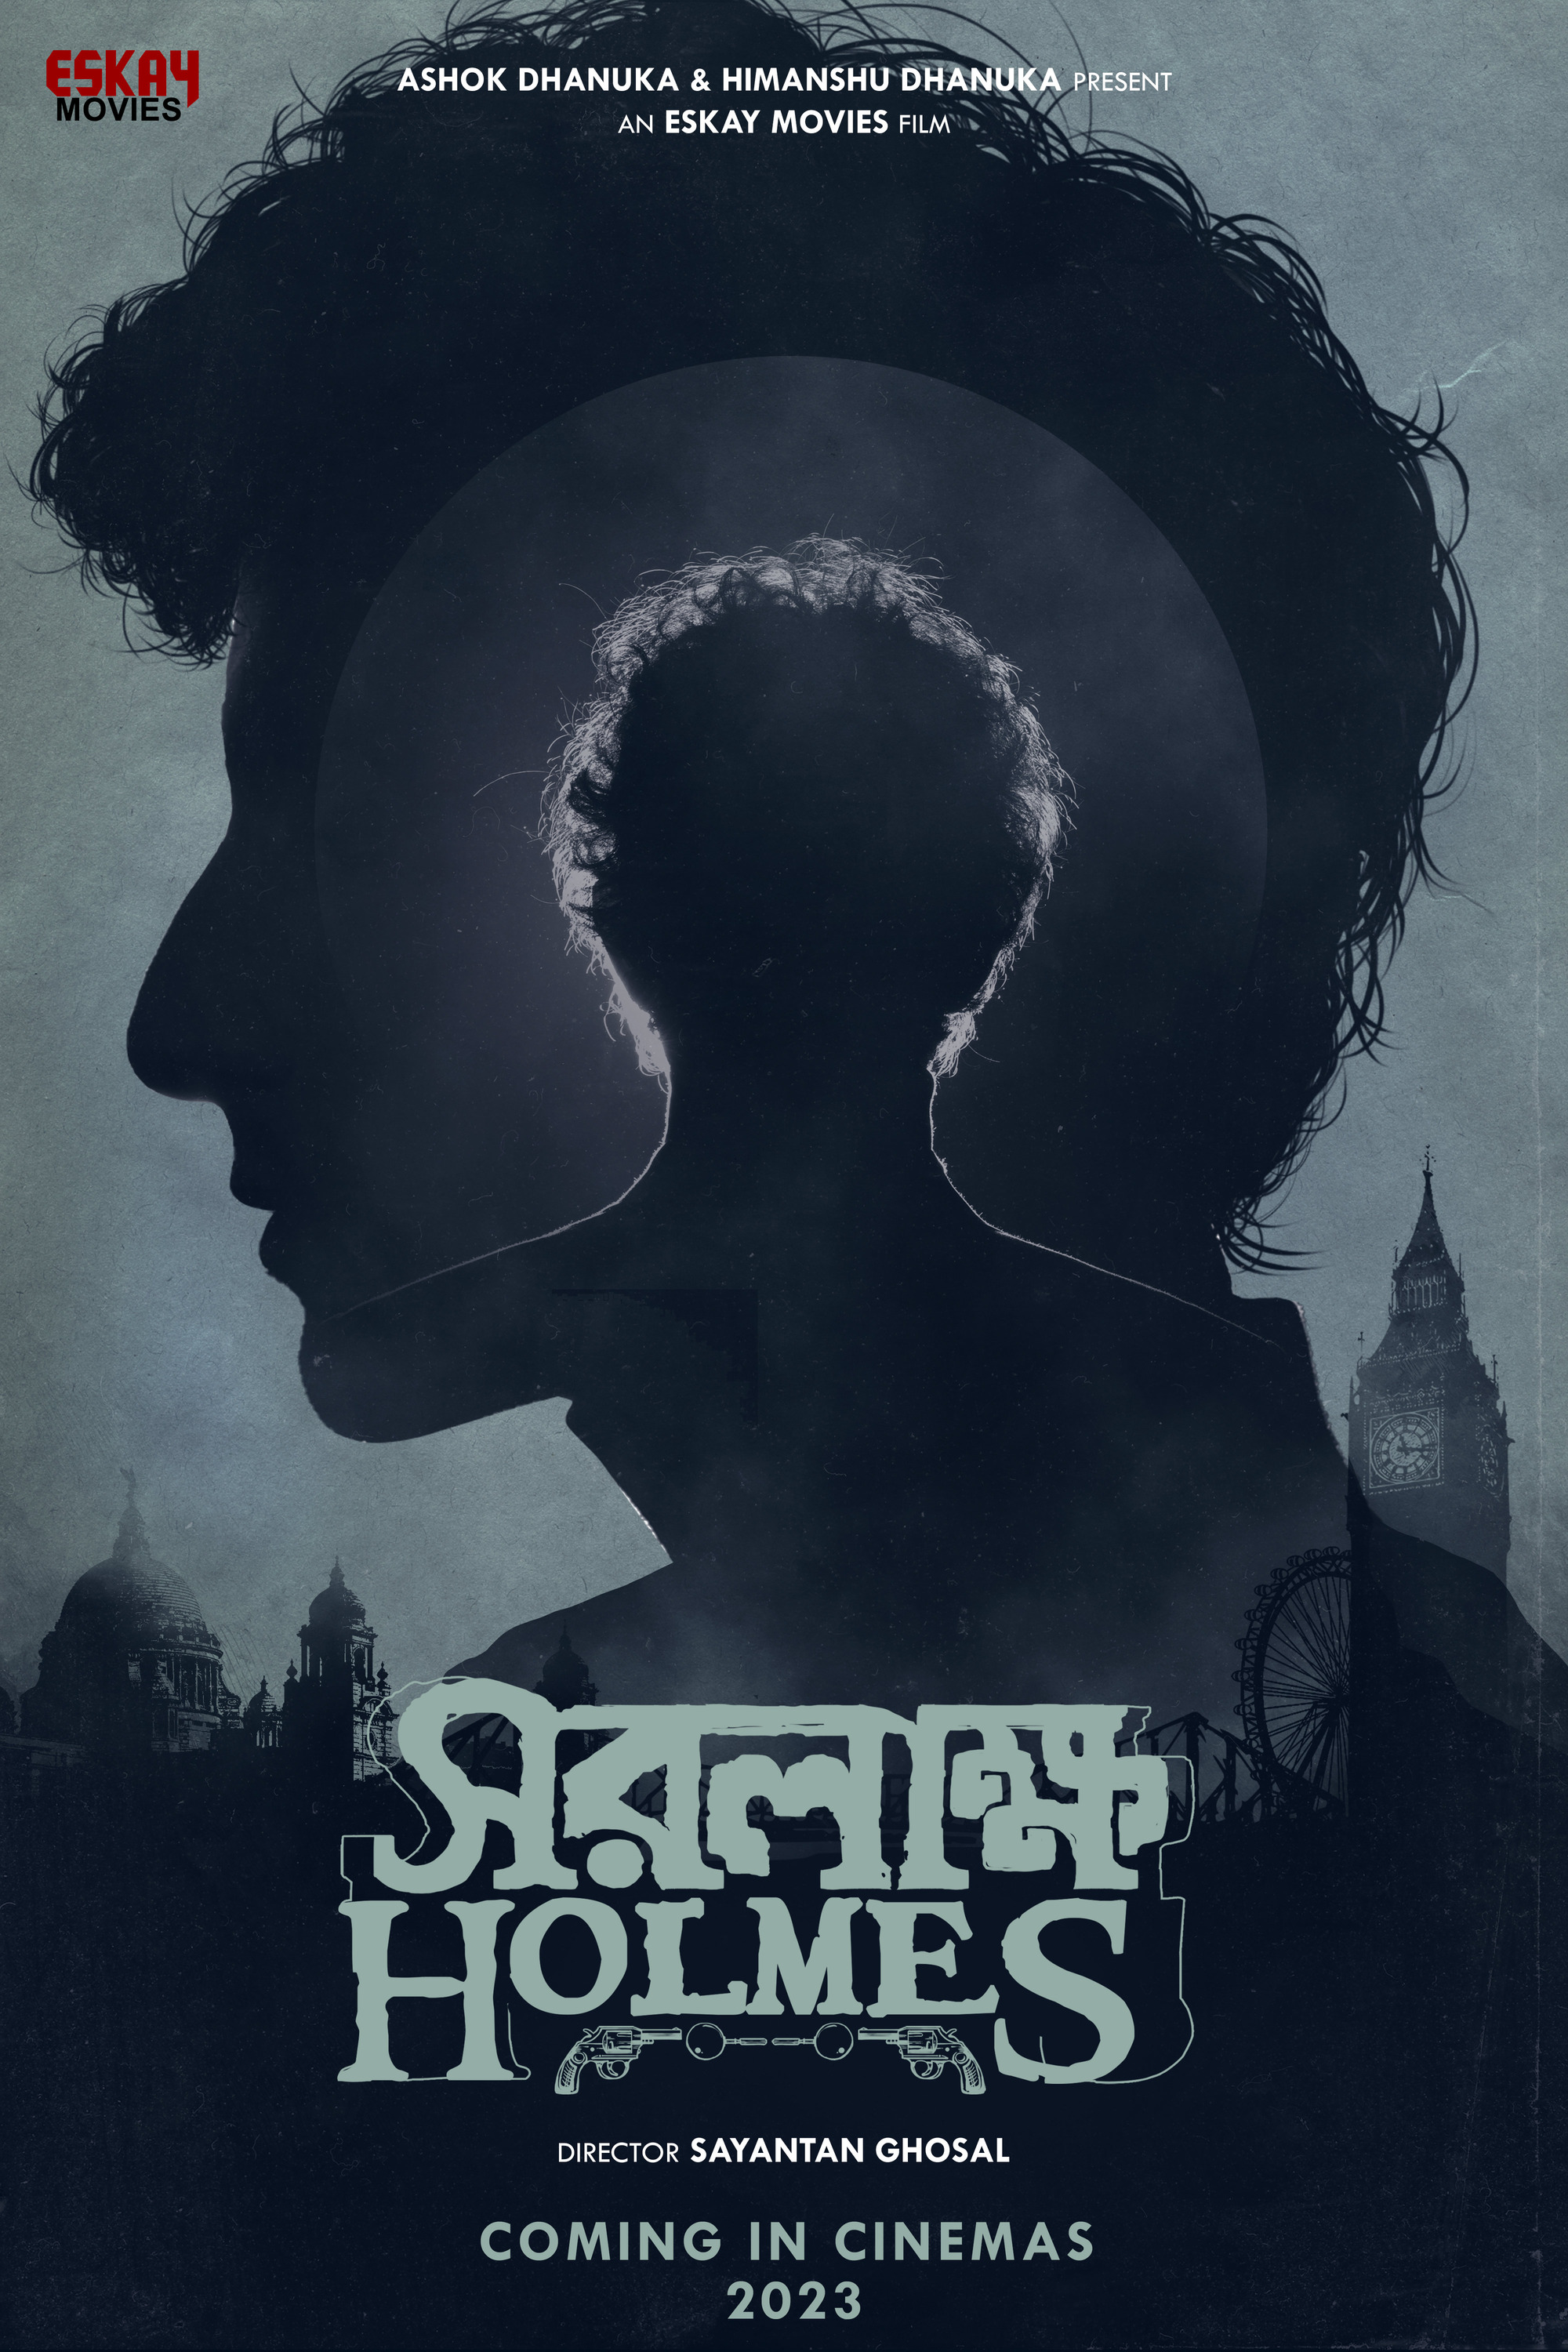 Mega Sized Movie Poster Image for Saralakkha Holmes 